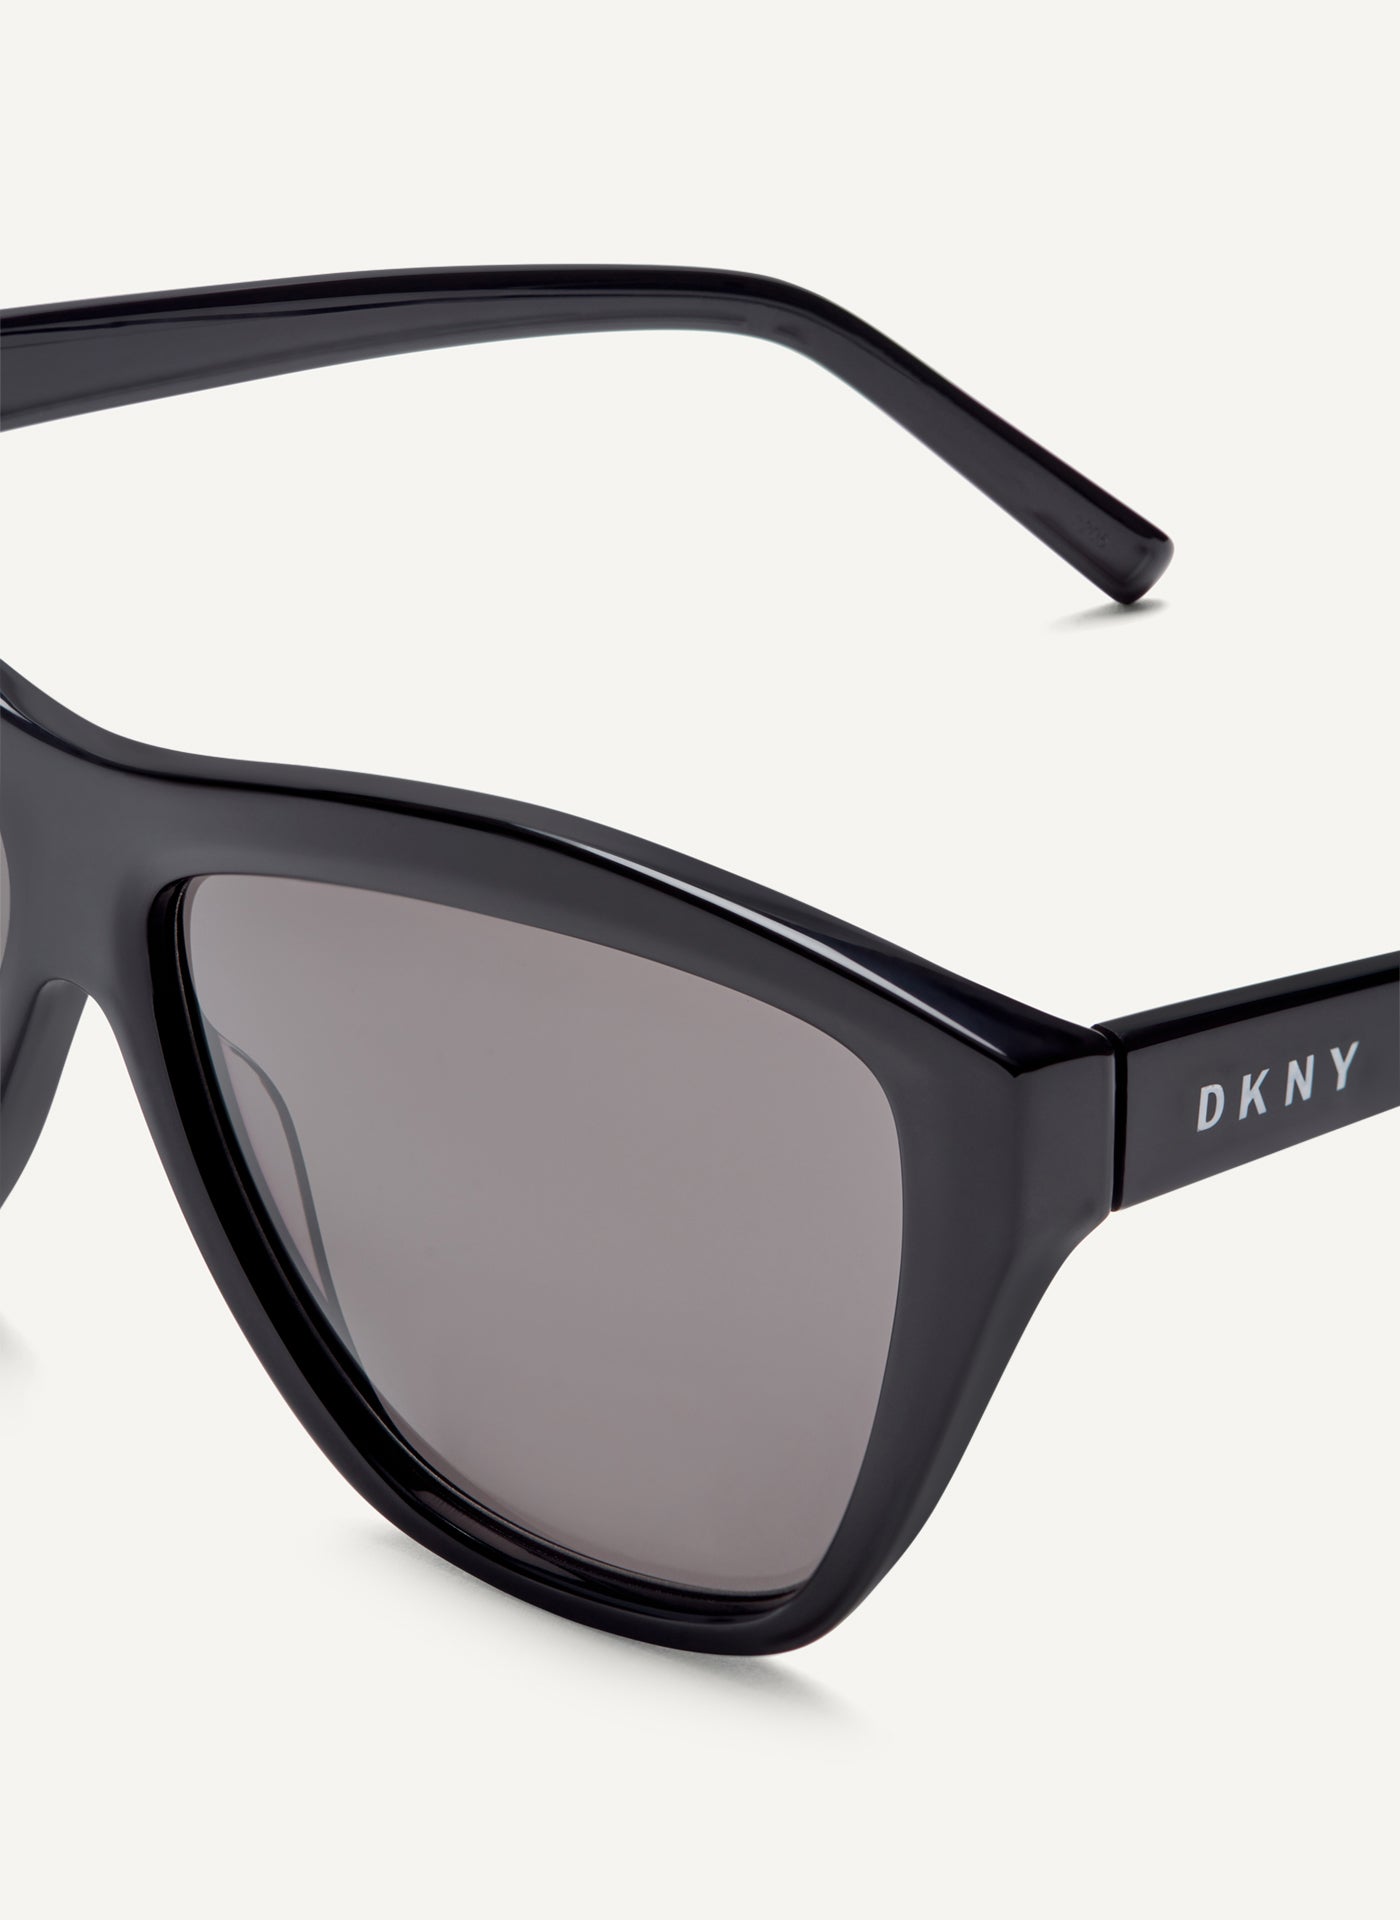 Donna Karan DKNY Signature Black Gray Canvas Top Leather Handles Clutch  Handbag Grey ref.438967 - Joli Closet